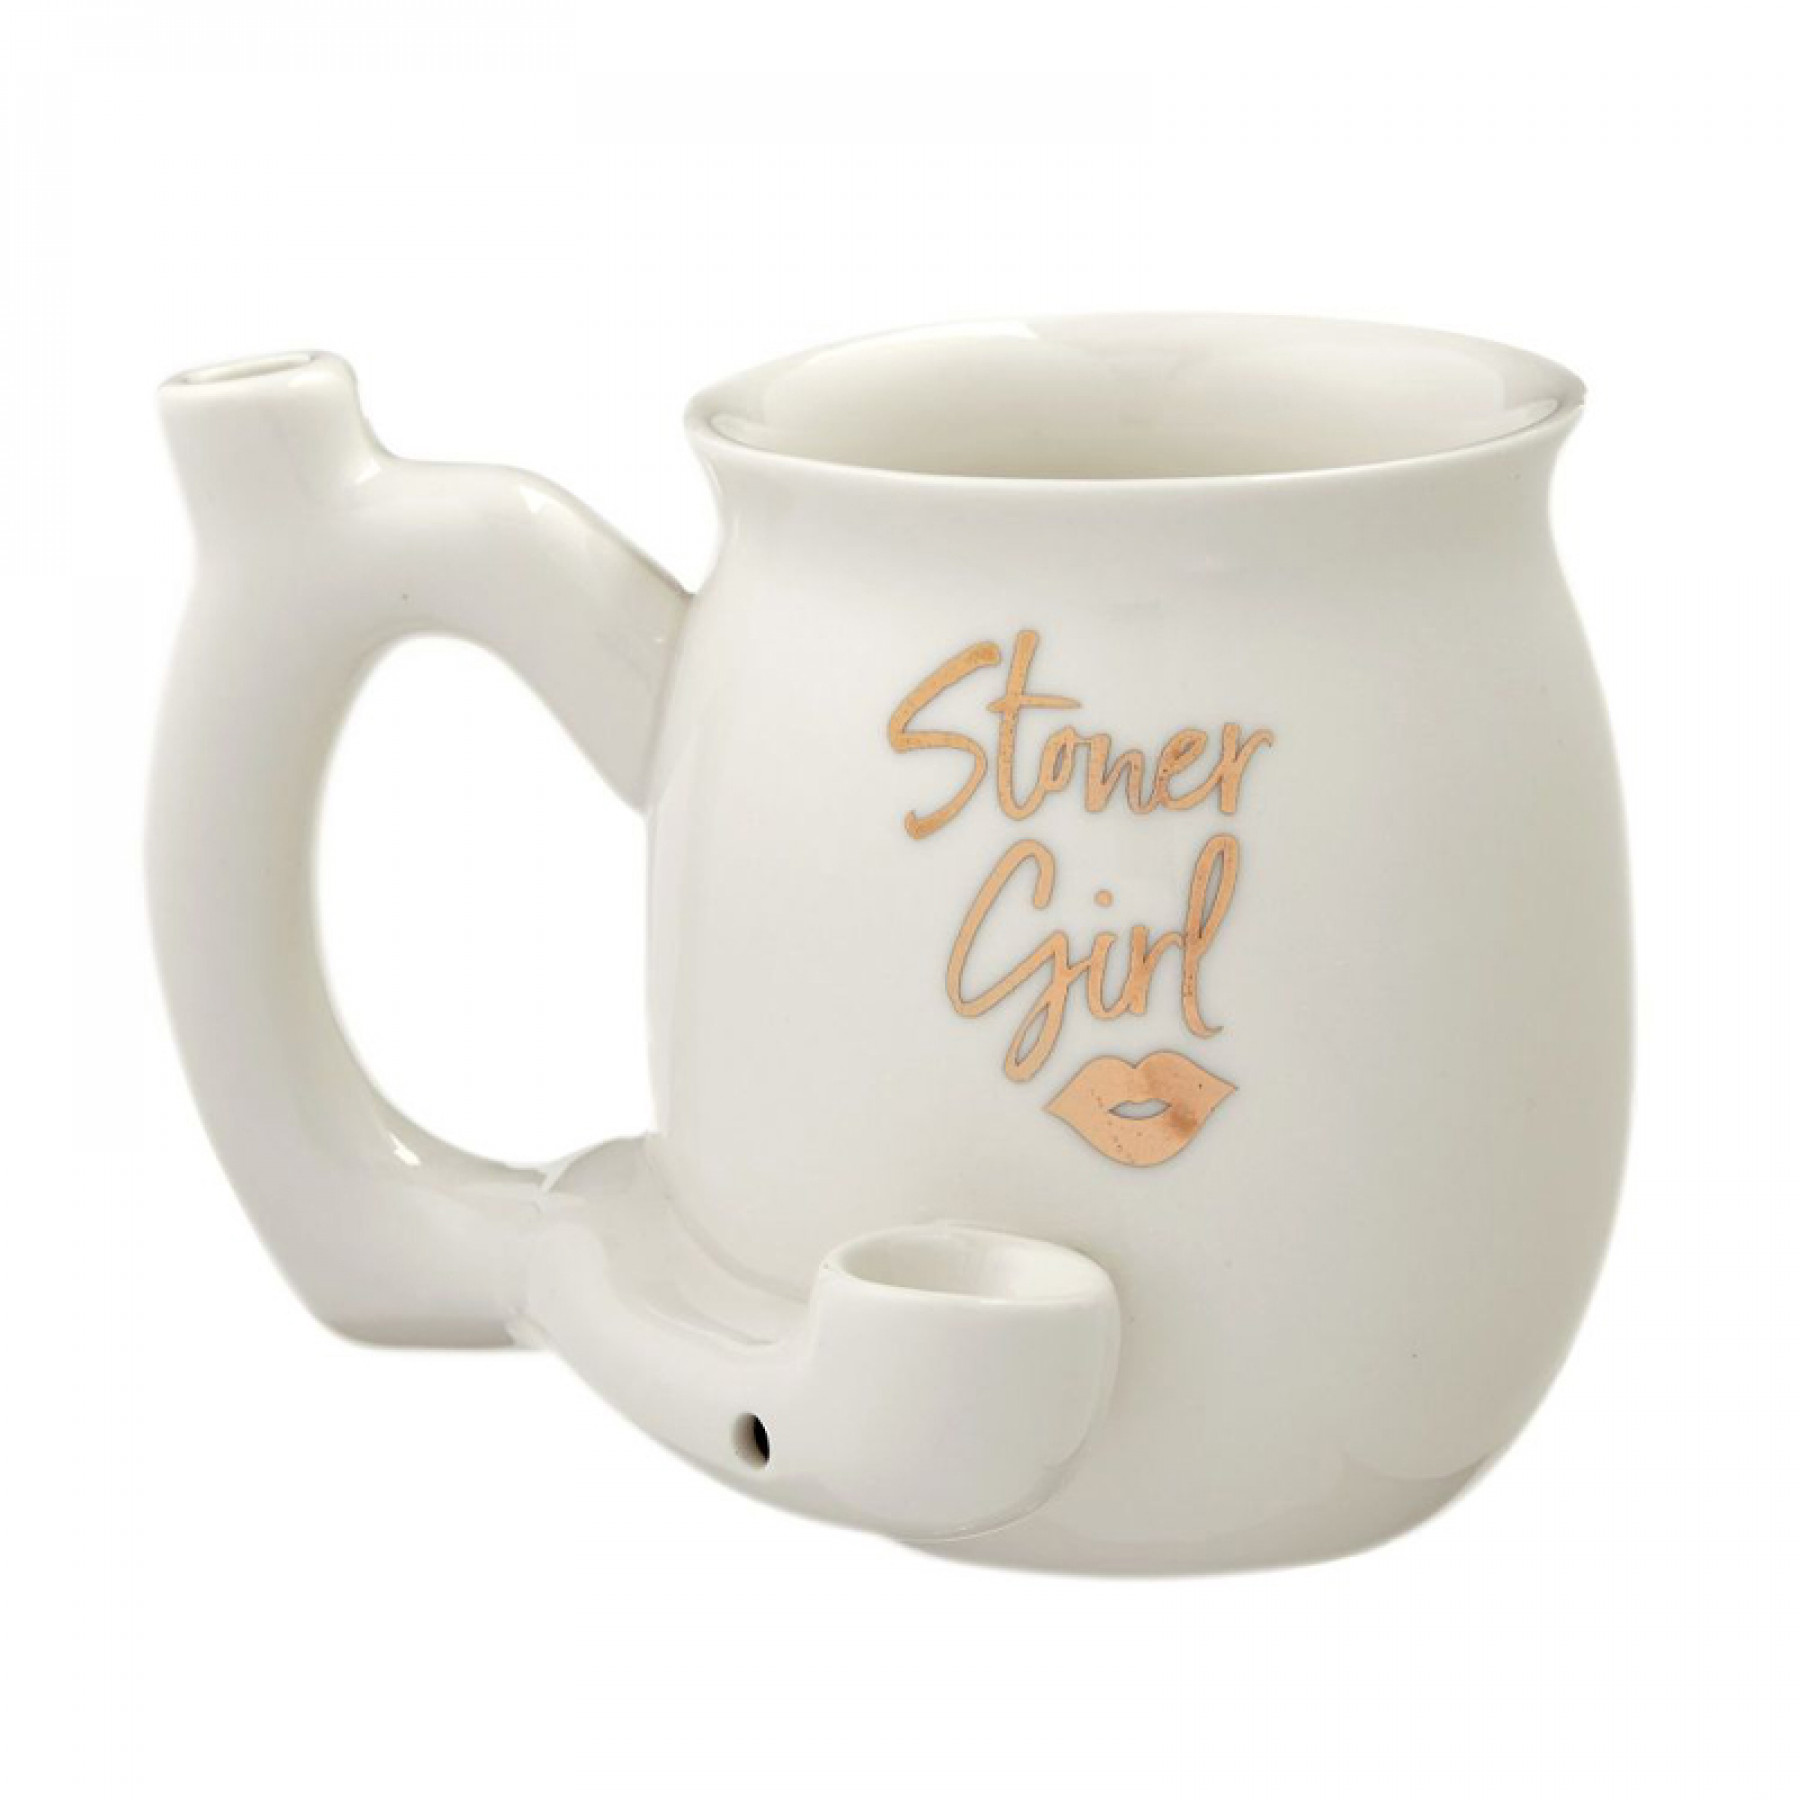 Stoner Girl Mug Pipe